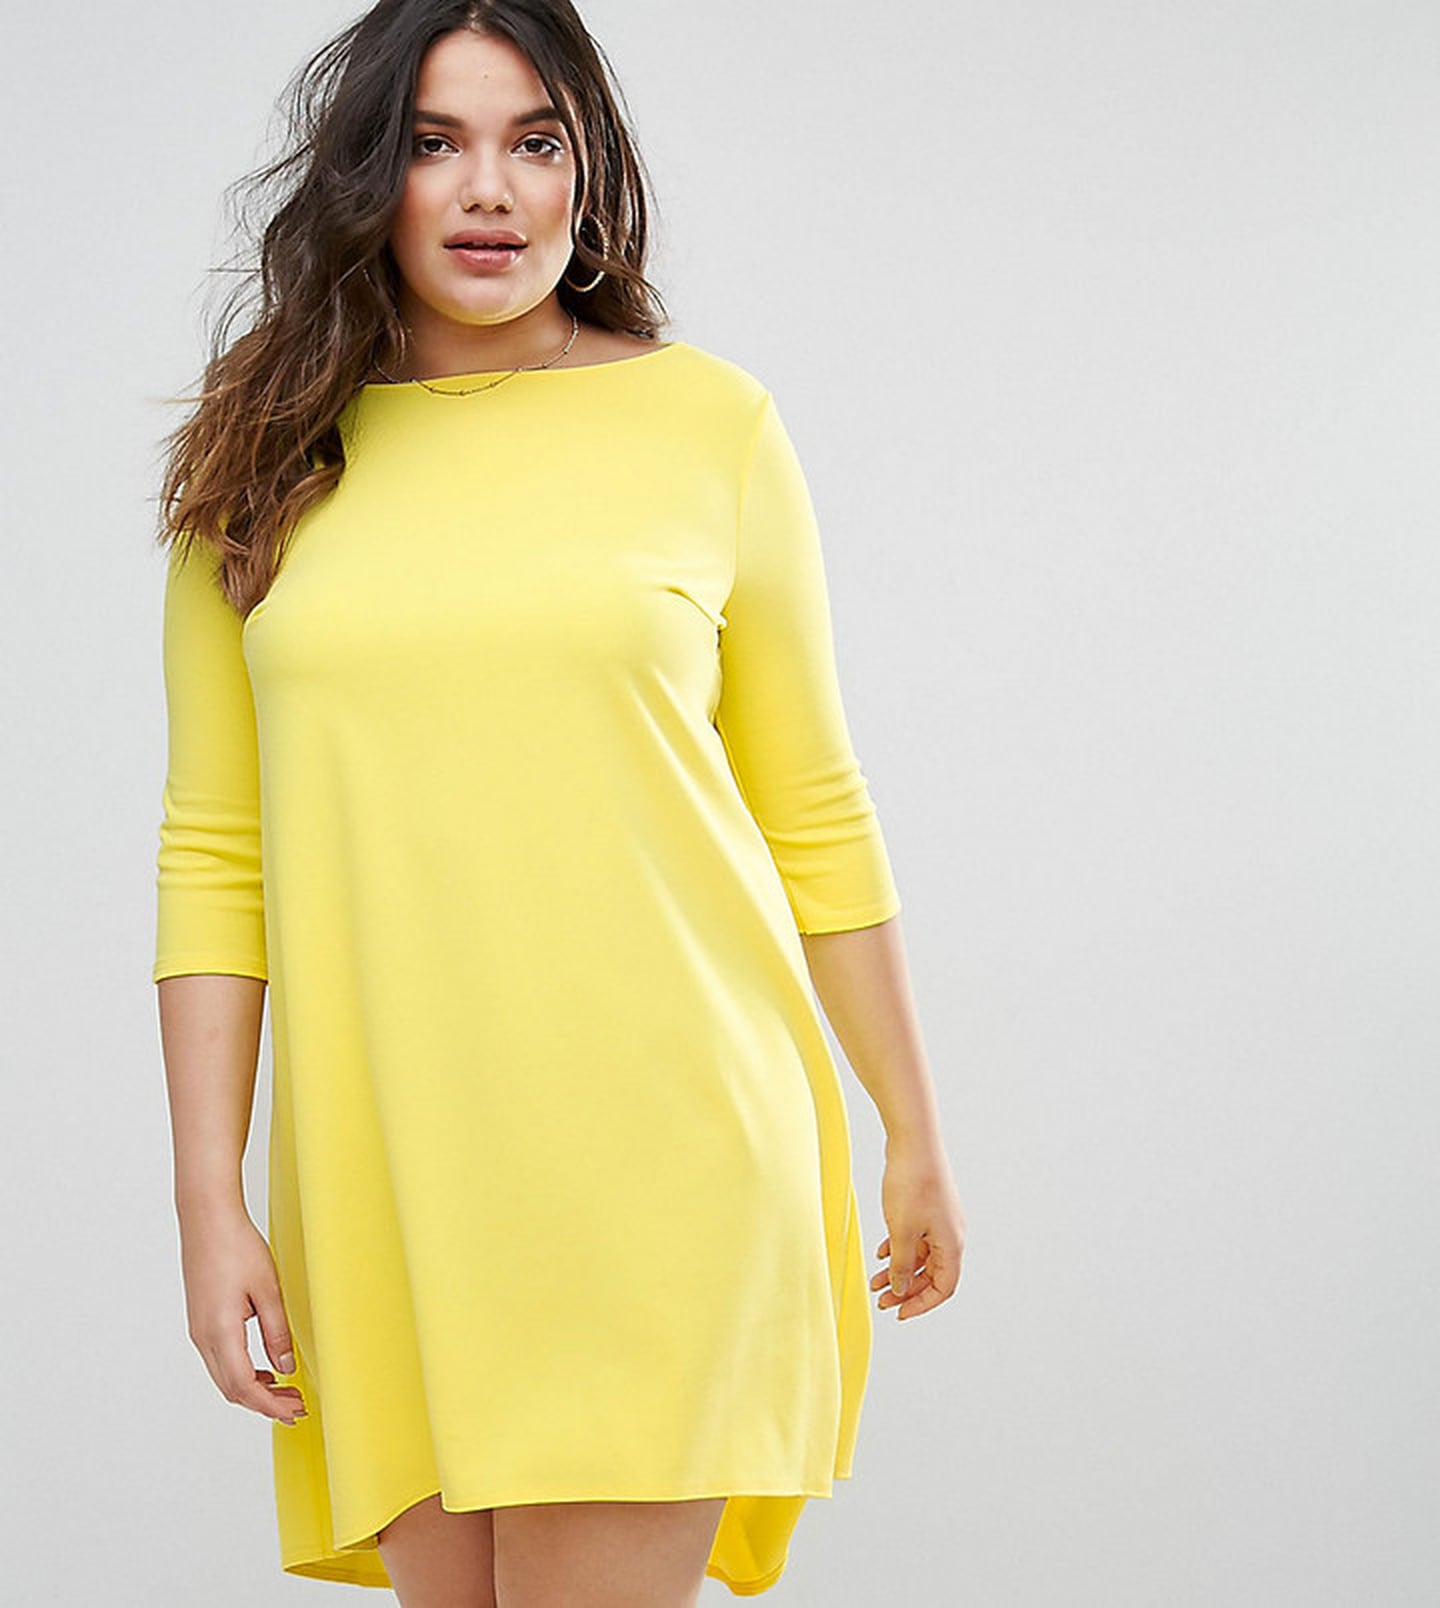 Gigi Hadid Yellow Ralph Lauren Dress | POPSUGAR Fashion